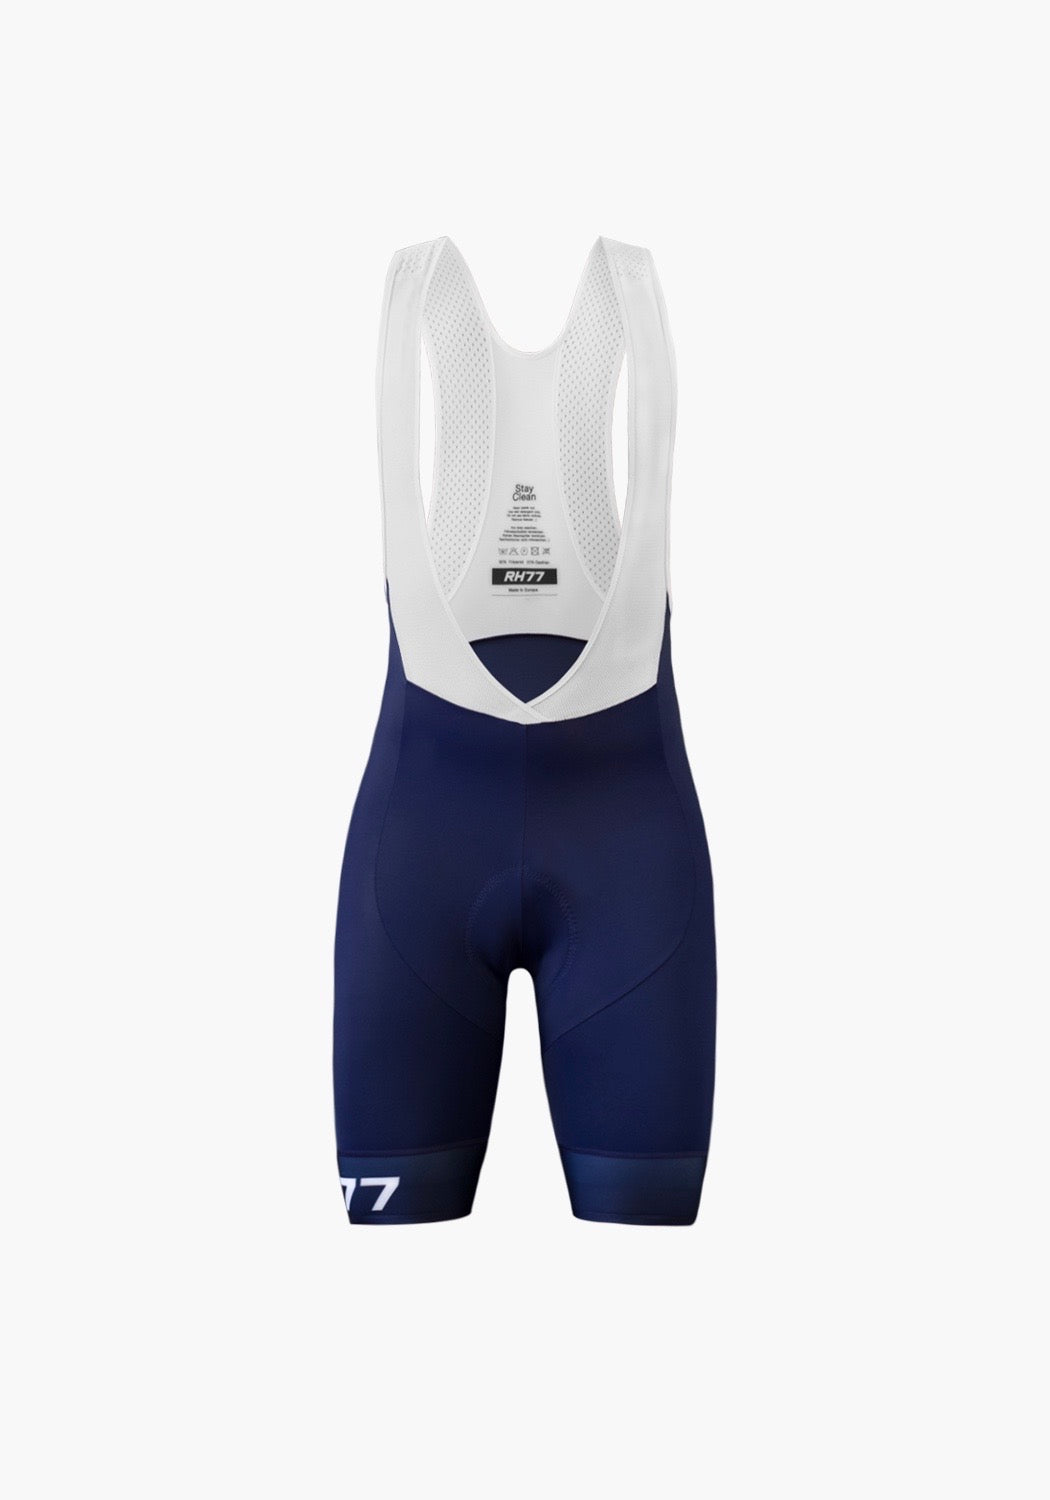 Download Damen Pro Navy Blue Bib Shorts - RH77 Haselbacher Cycling Wear